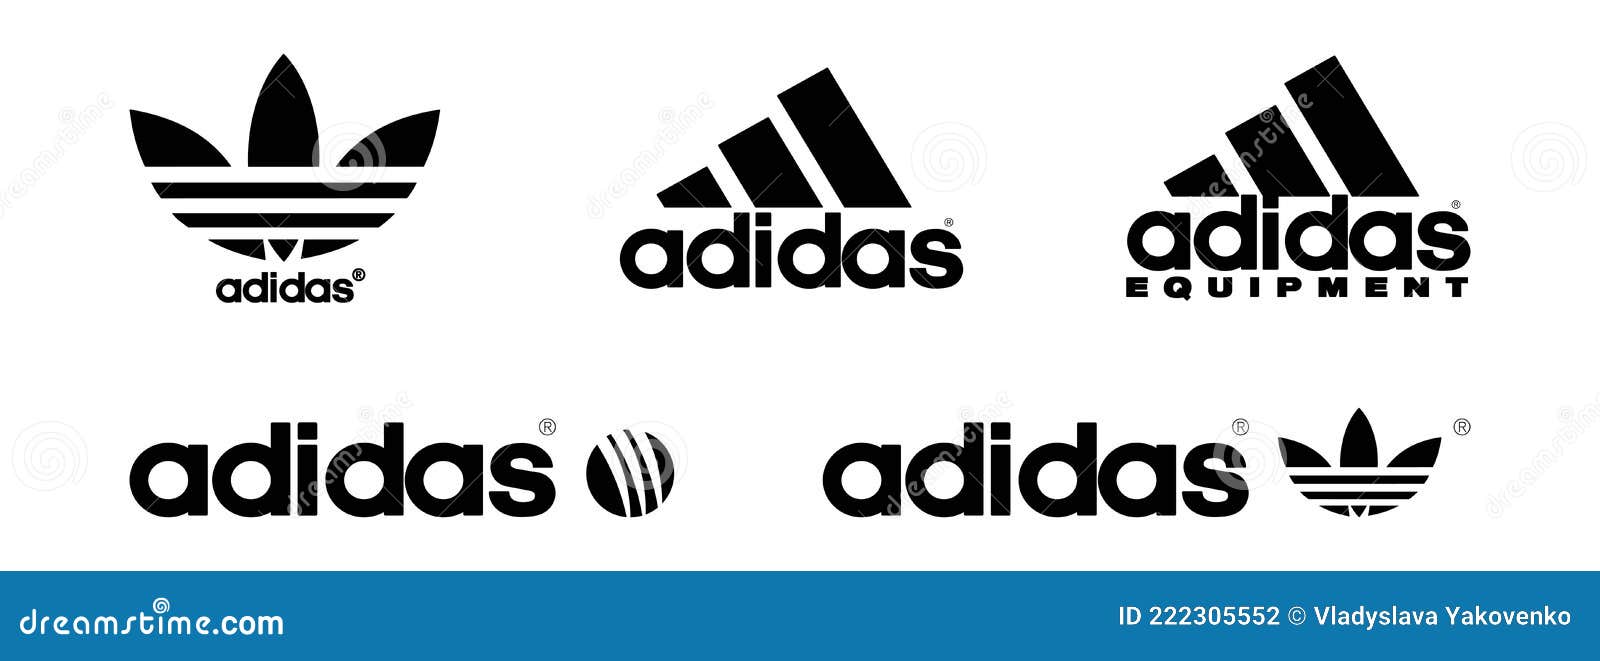 Set of Logos Adidas. Adidas Original. Logos of Sports Equipment and Sportswear Company. Icon. Editorial Photography - Illustration of logos, expensive: 222305552